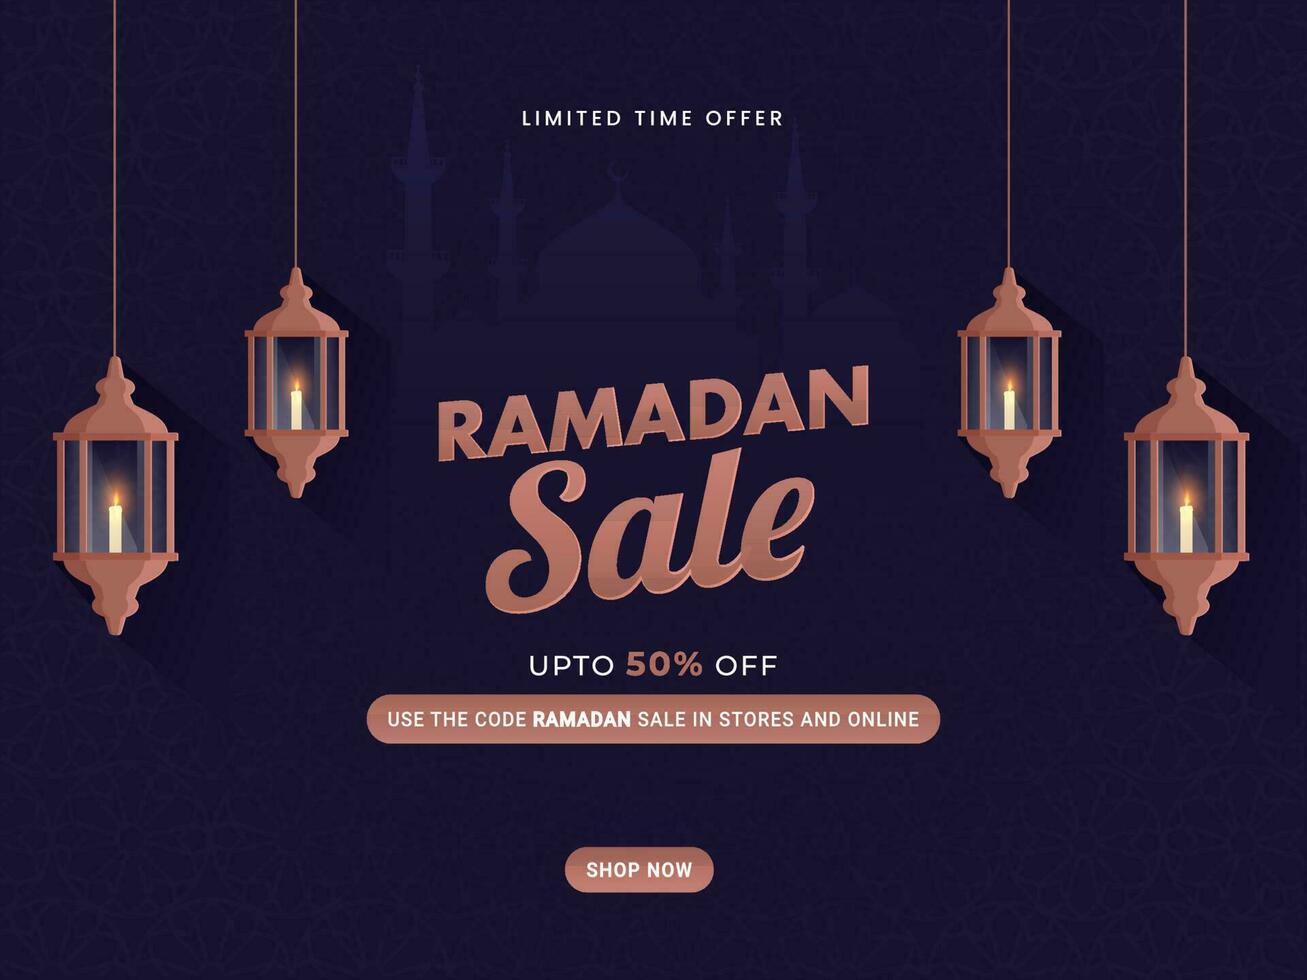 Ramadan Sale Poster Design With Hanging Illuminated Lanterns. vector